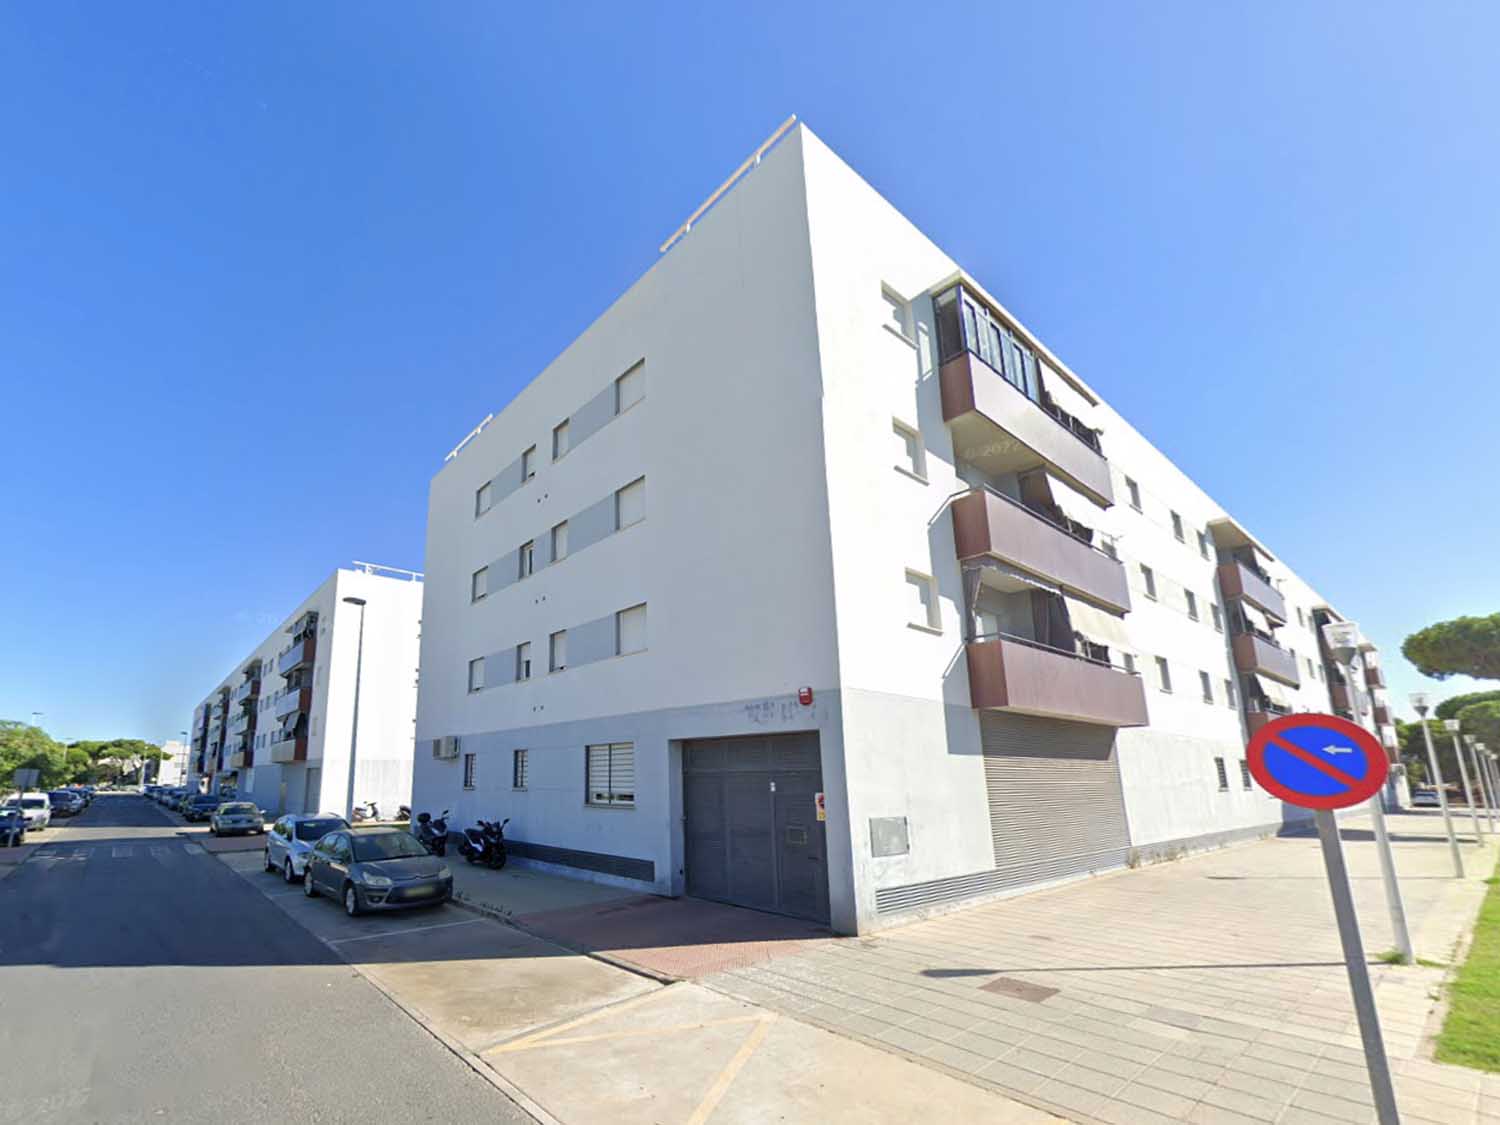 2nd floor apartment, letter C, in Plaza Don Eloy Martin Mayor no. 11 in Punta Umbría, (Huelva). FR 27478 RP of Punta Umbría